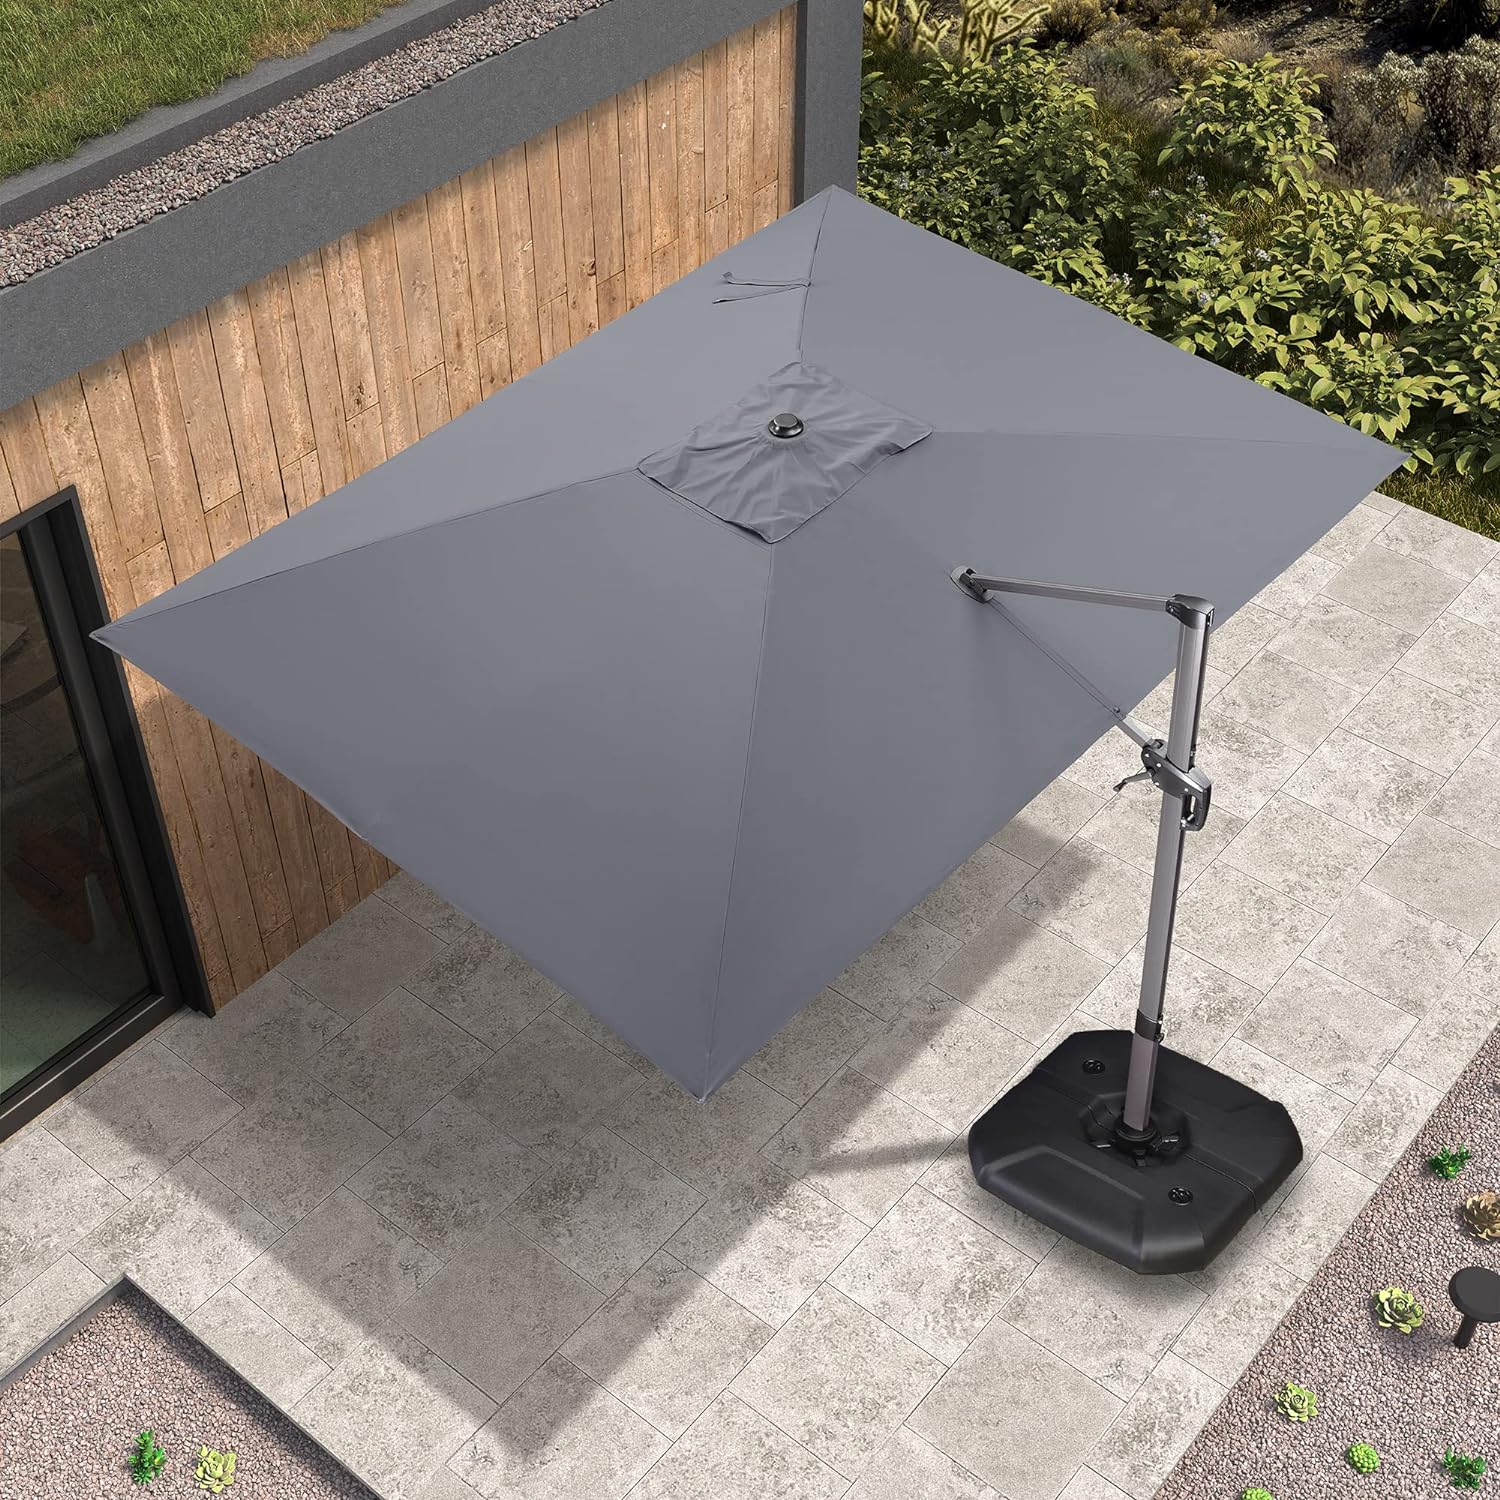 PURPLE LEAF 9 ft x 11.5 ft Aluminum 360-degree Rotation Offset Cantilever Umbrella Patio Outdoor Umbrella for Garden Deck Pool Patio, Gray